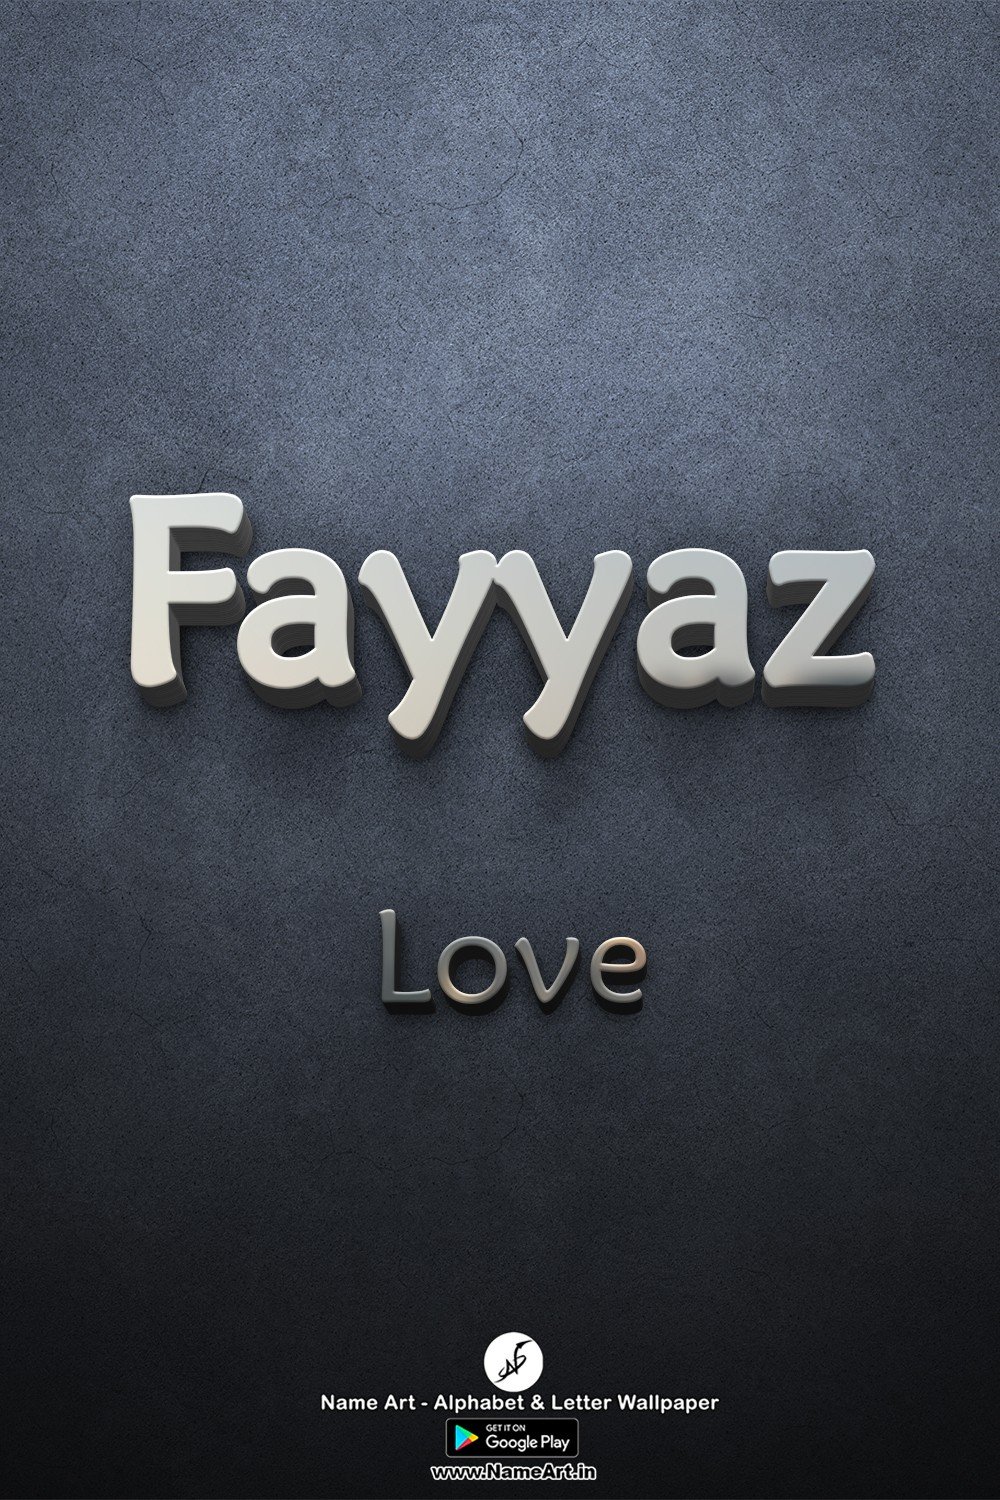 Fayyaz | Whatsapp Status Fayyaz | Happy Birthday Fayyaz !! | New Whatsapp Status Fayyaz Images |